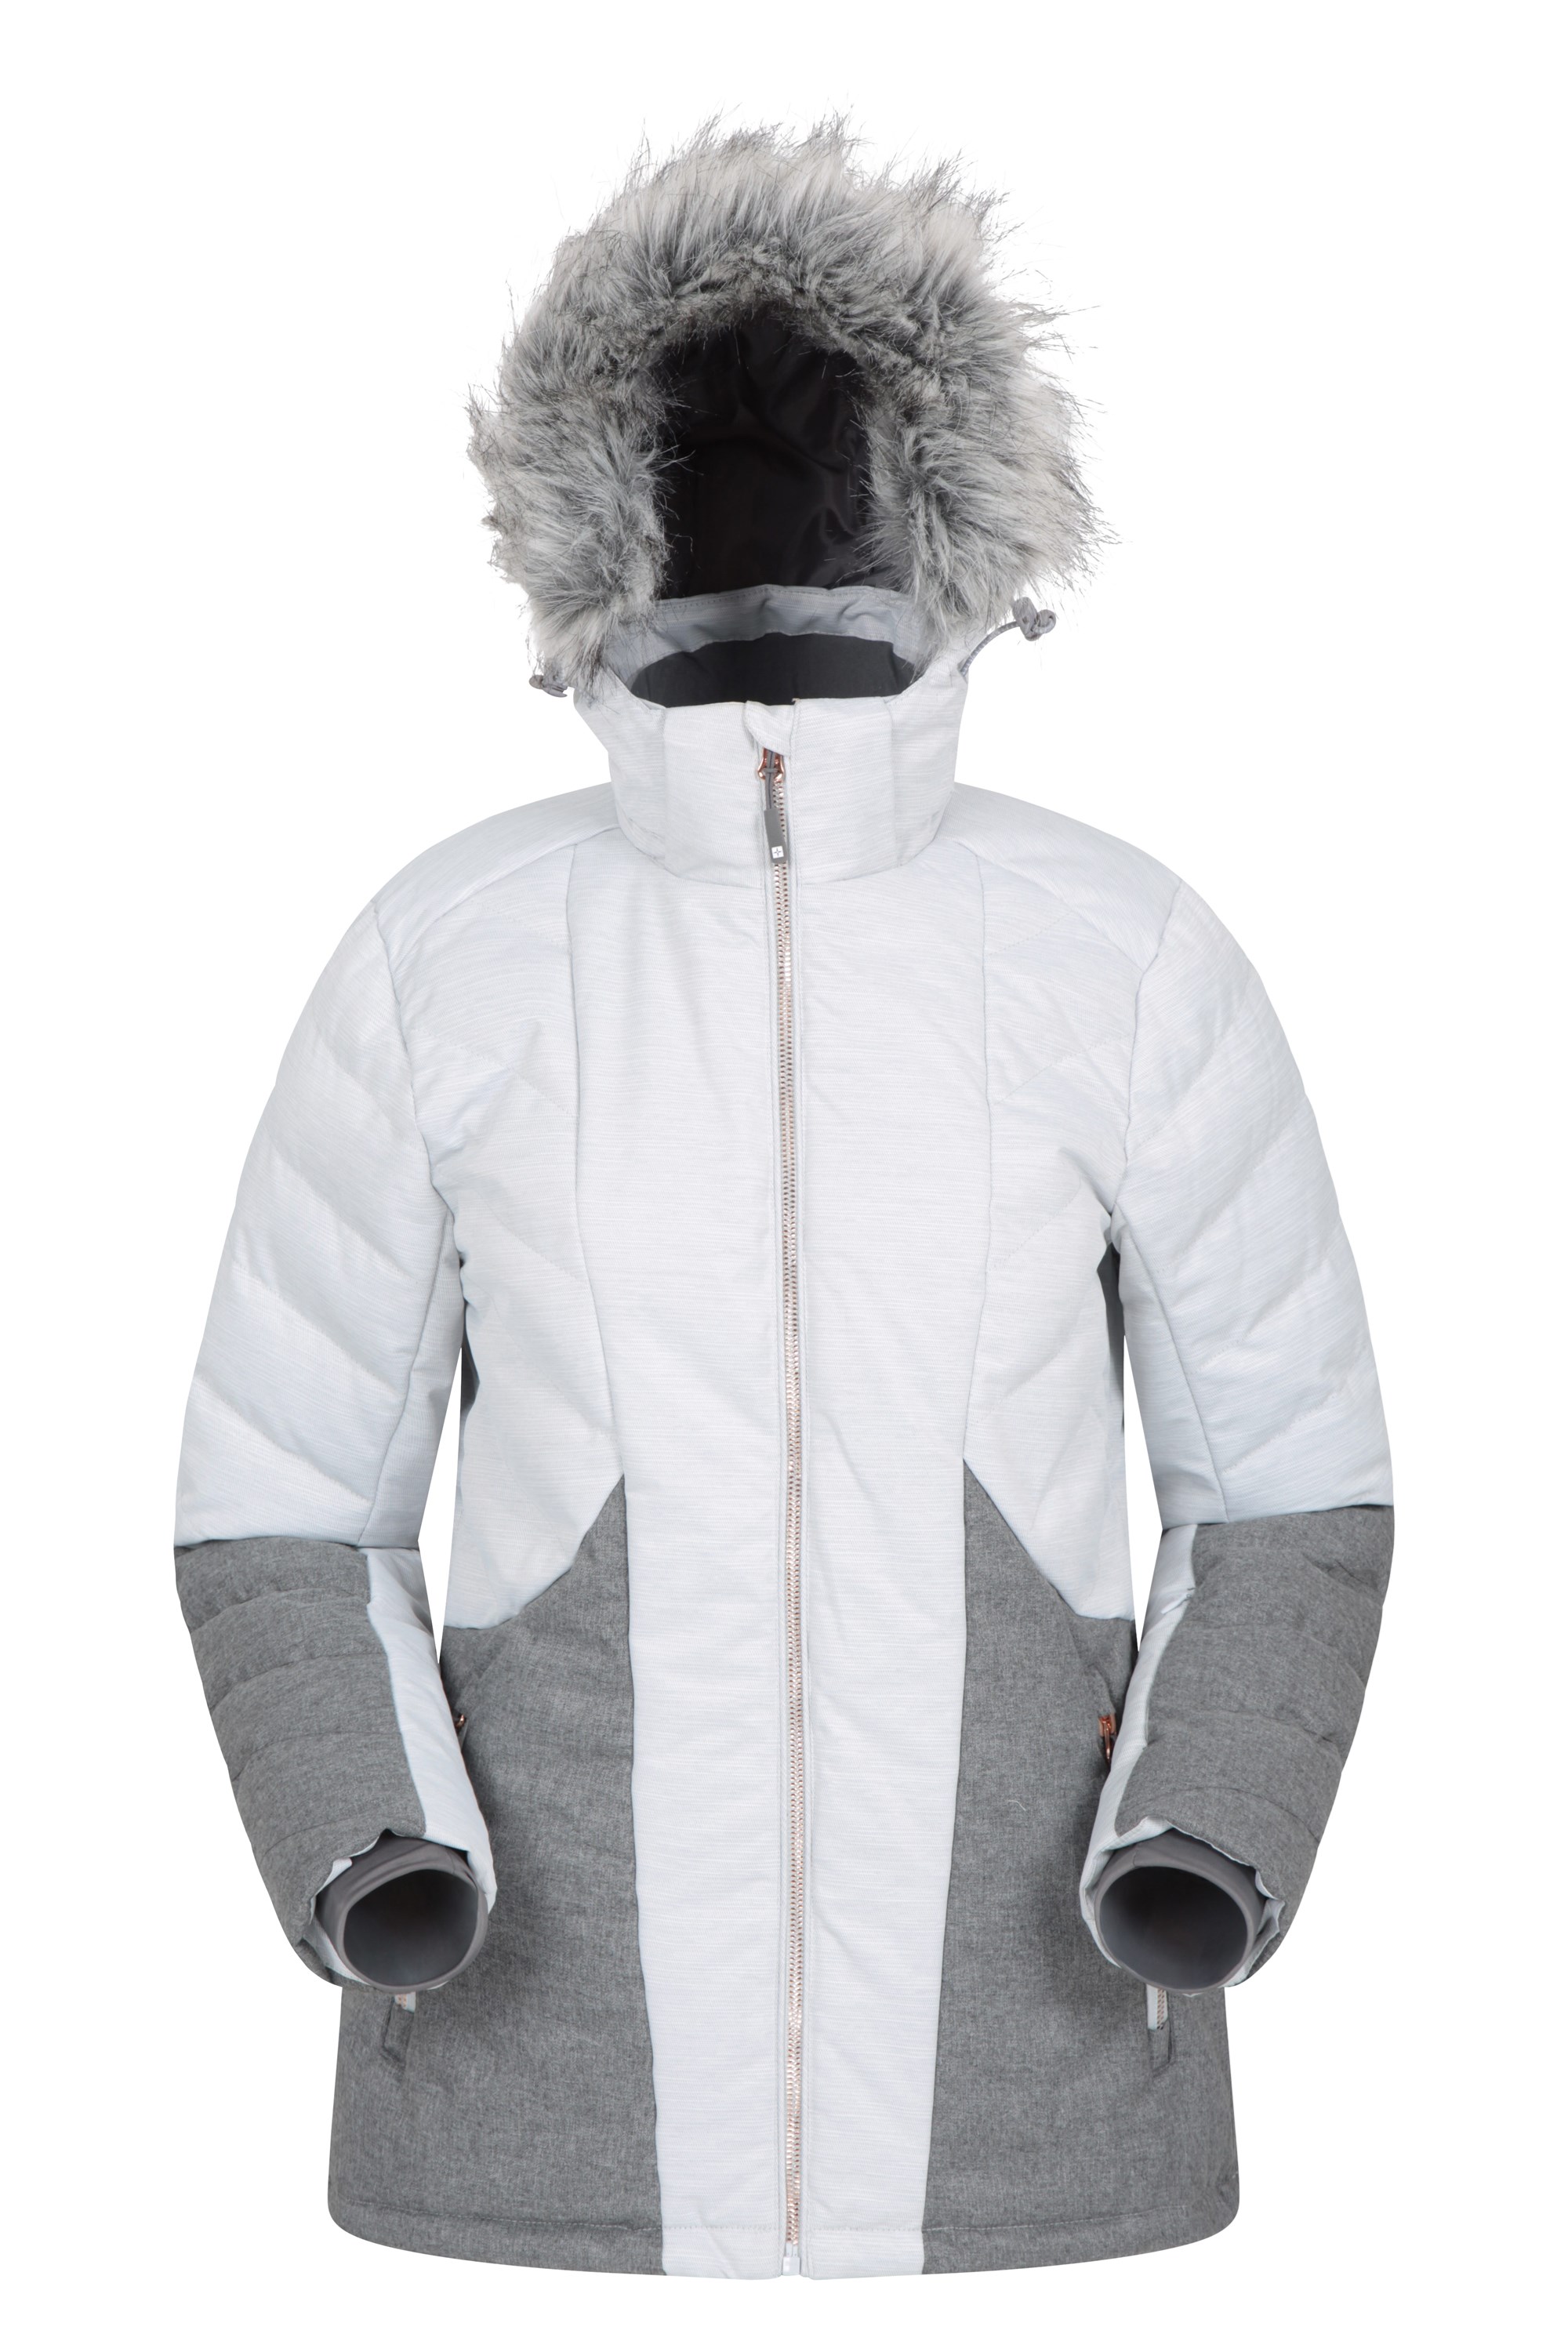 Mountain Warehouse Snowflake Womens Padded Ski Jacket Grey